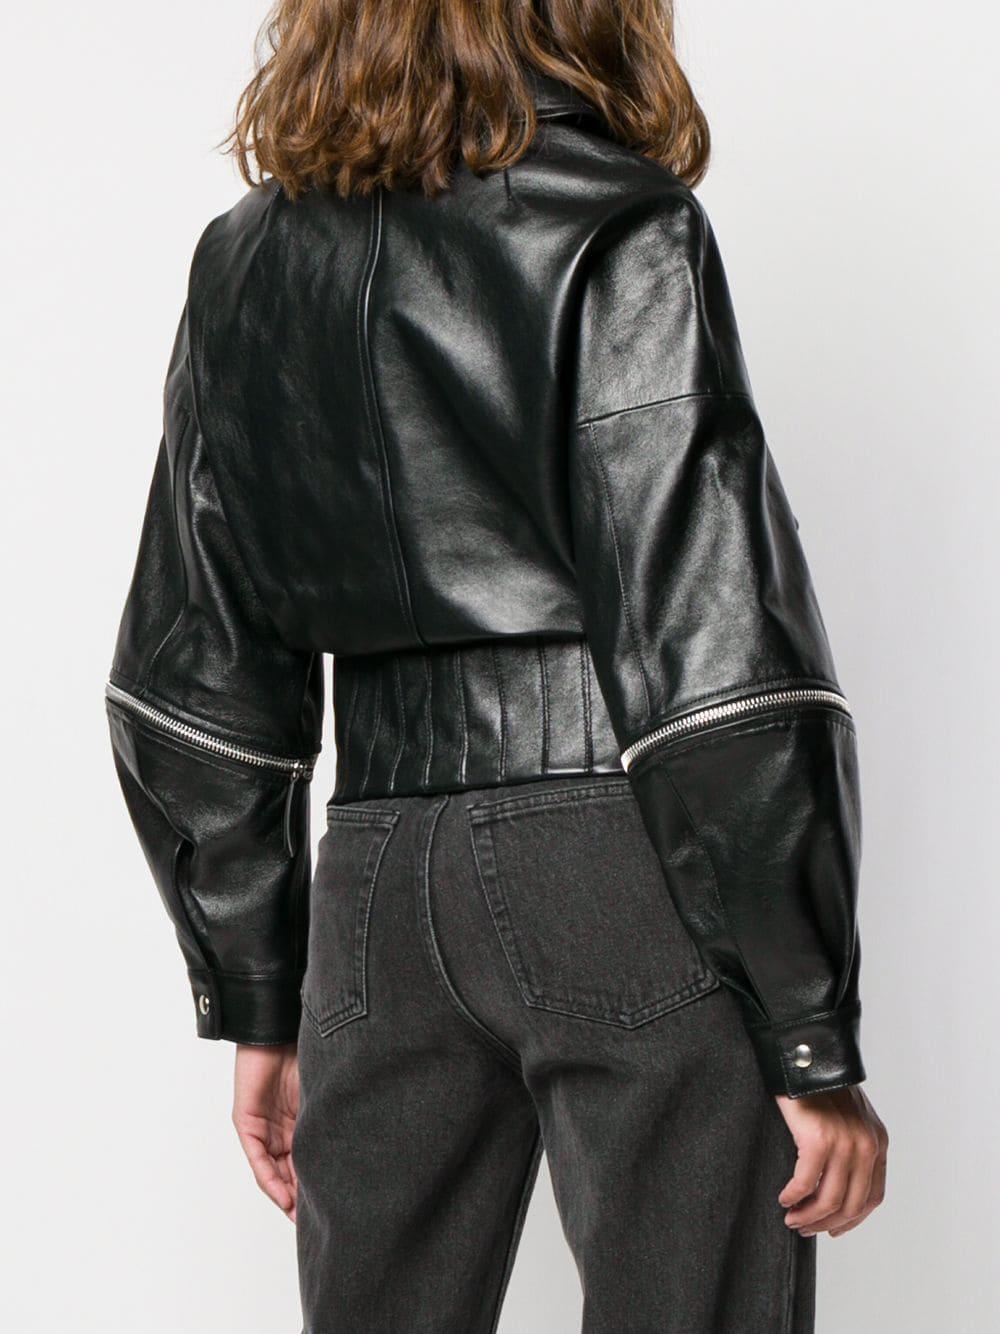 giuseppe zanotti leather jacket